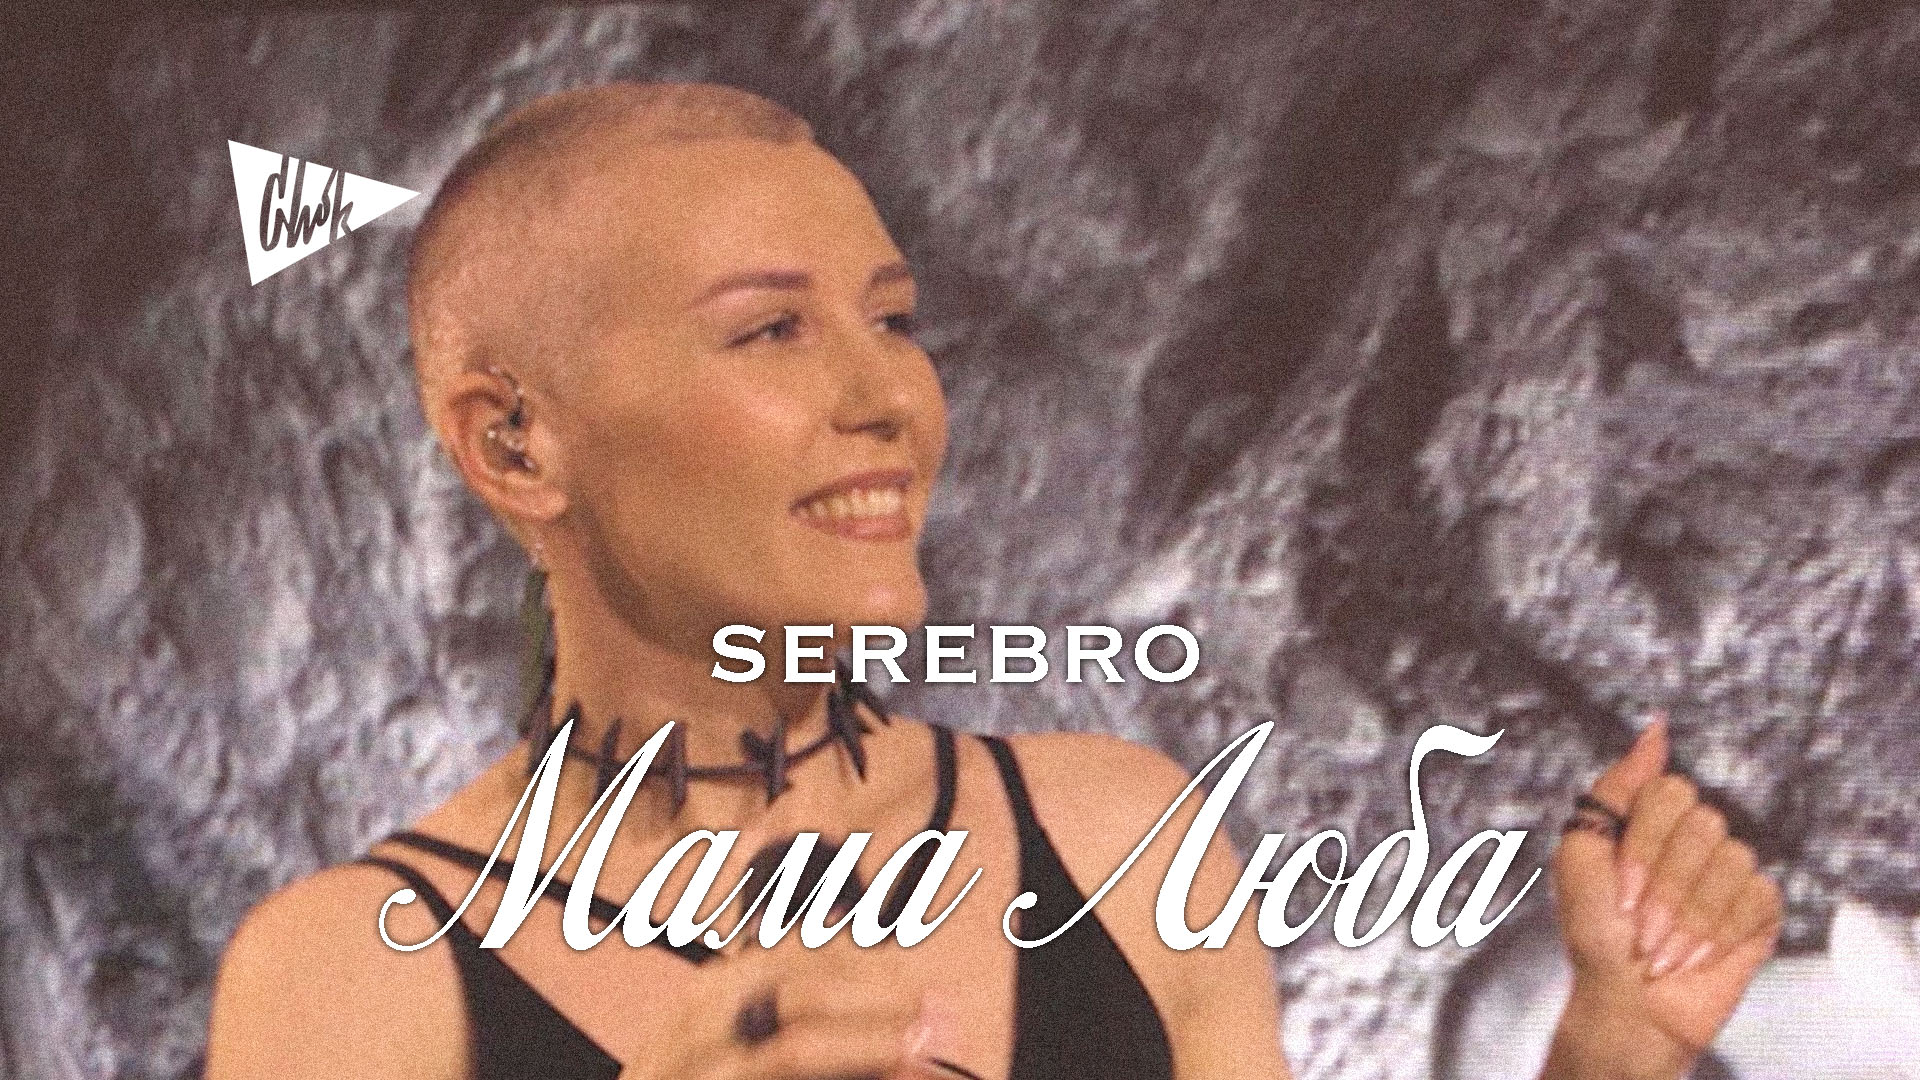 SEREBRO - Мама Люба (Chok live cover)